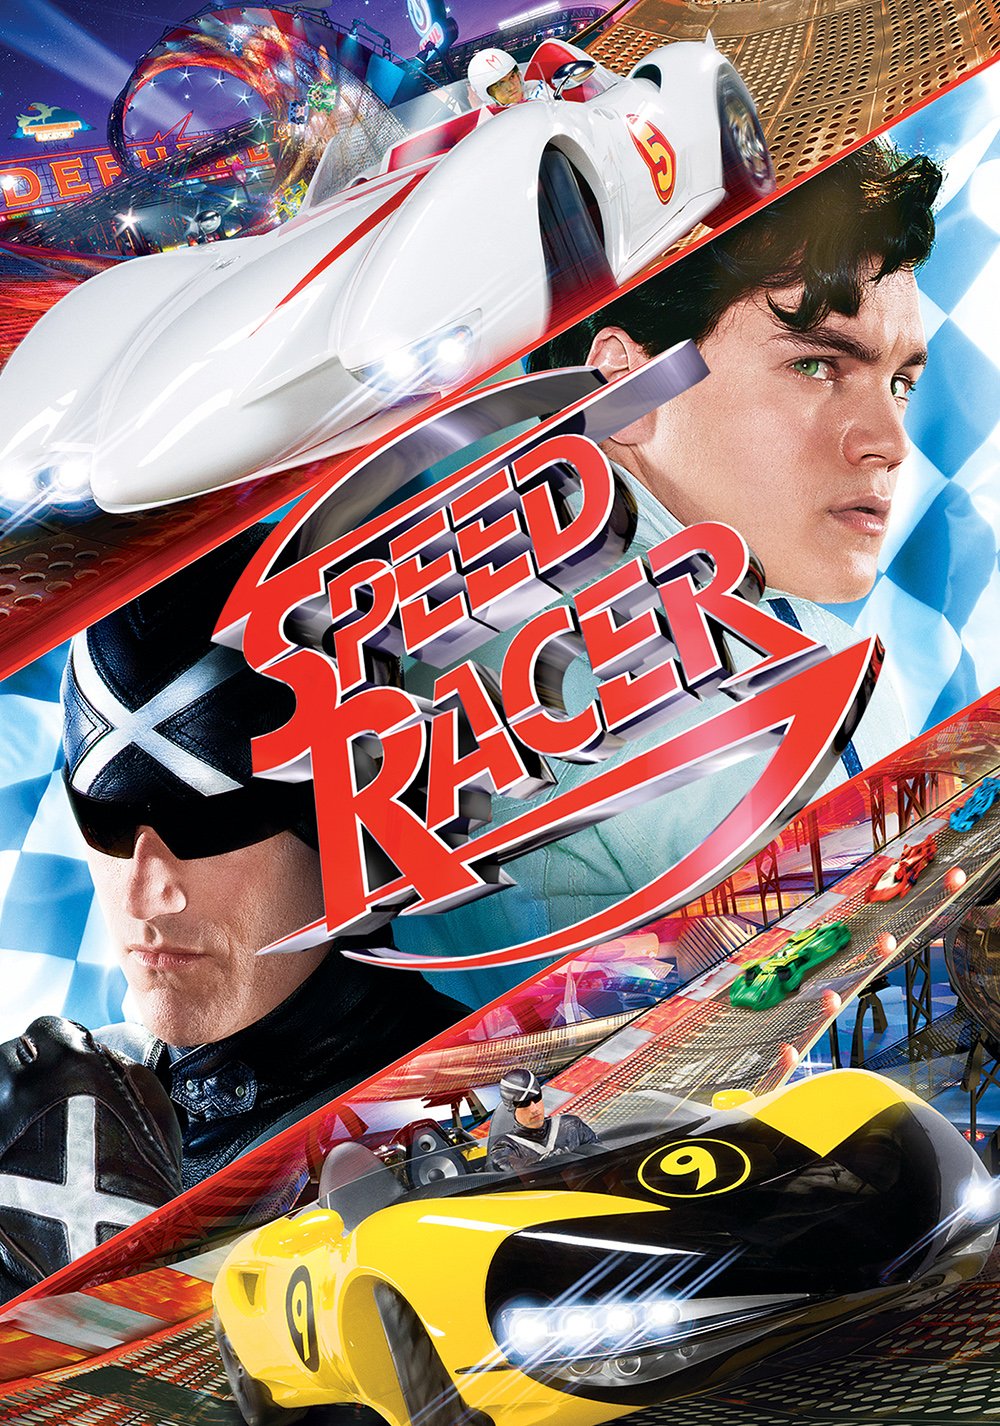 speed racer 2008 full movie download